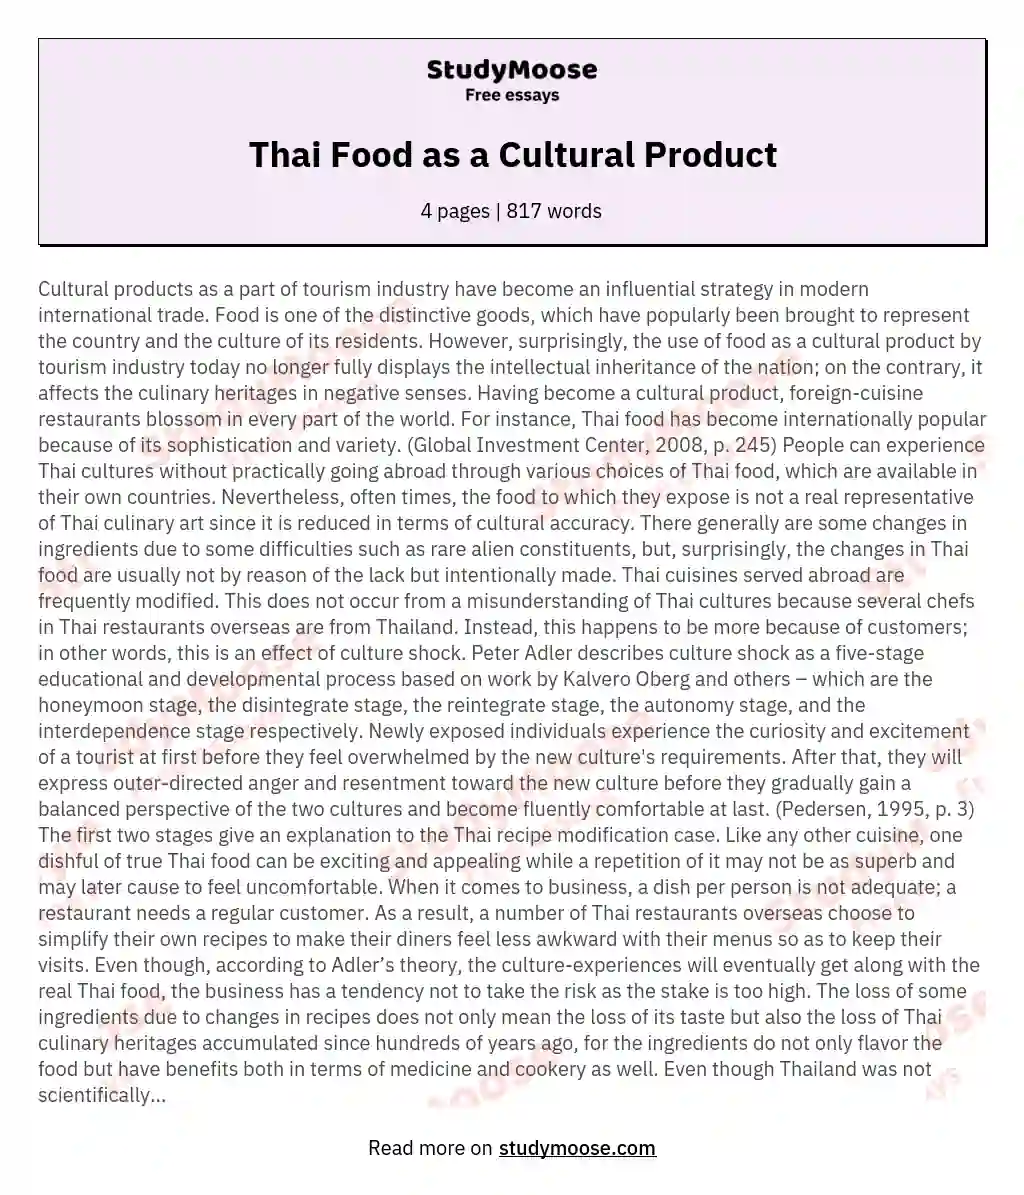 Thai Food as a Cultural Product essay